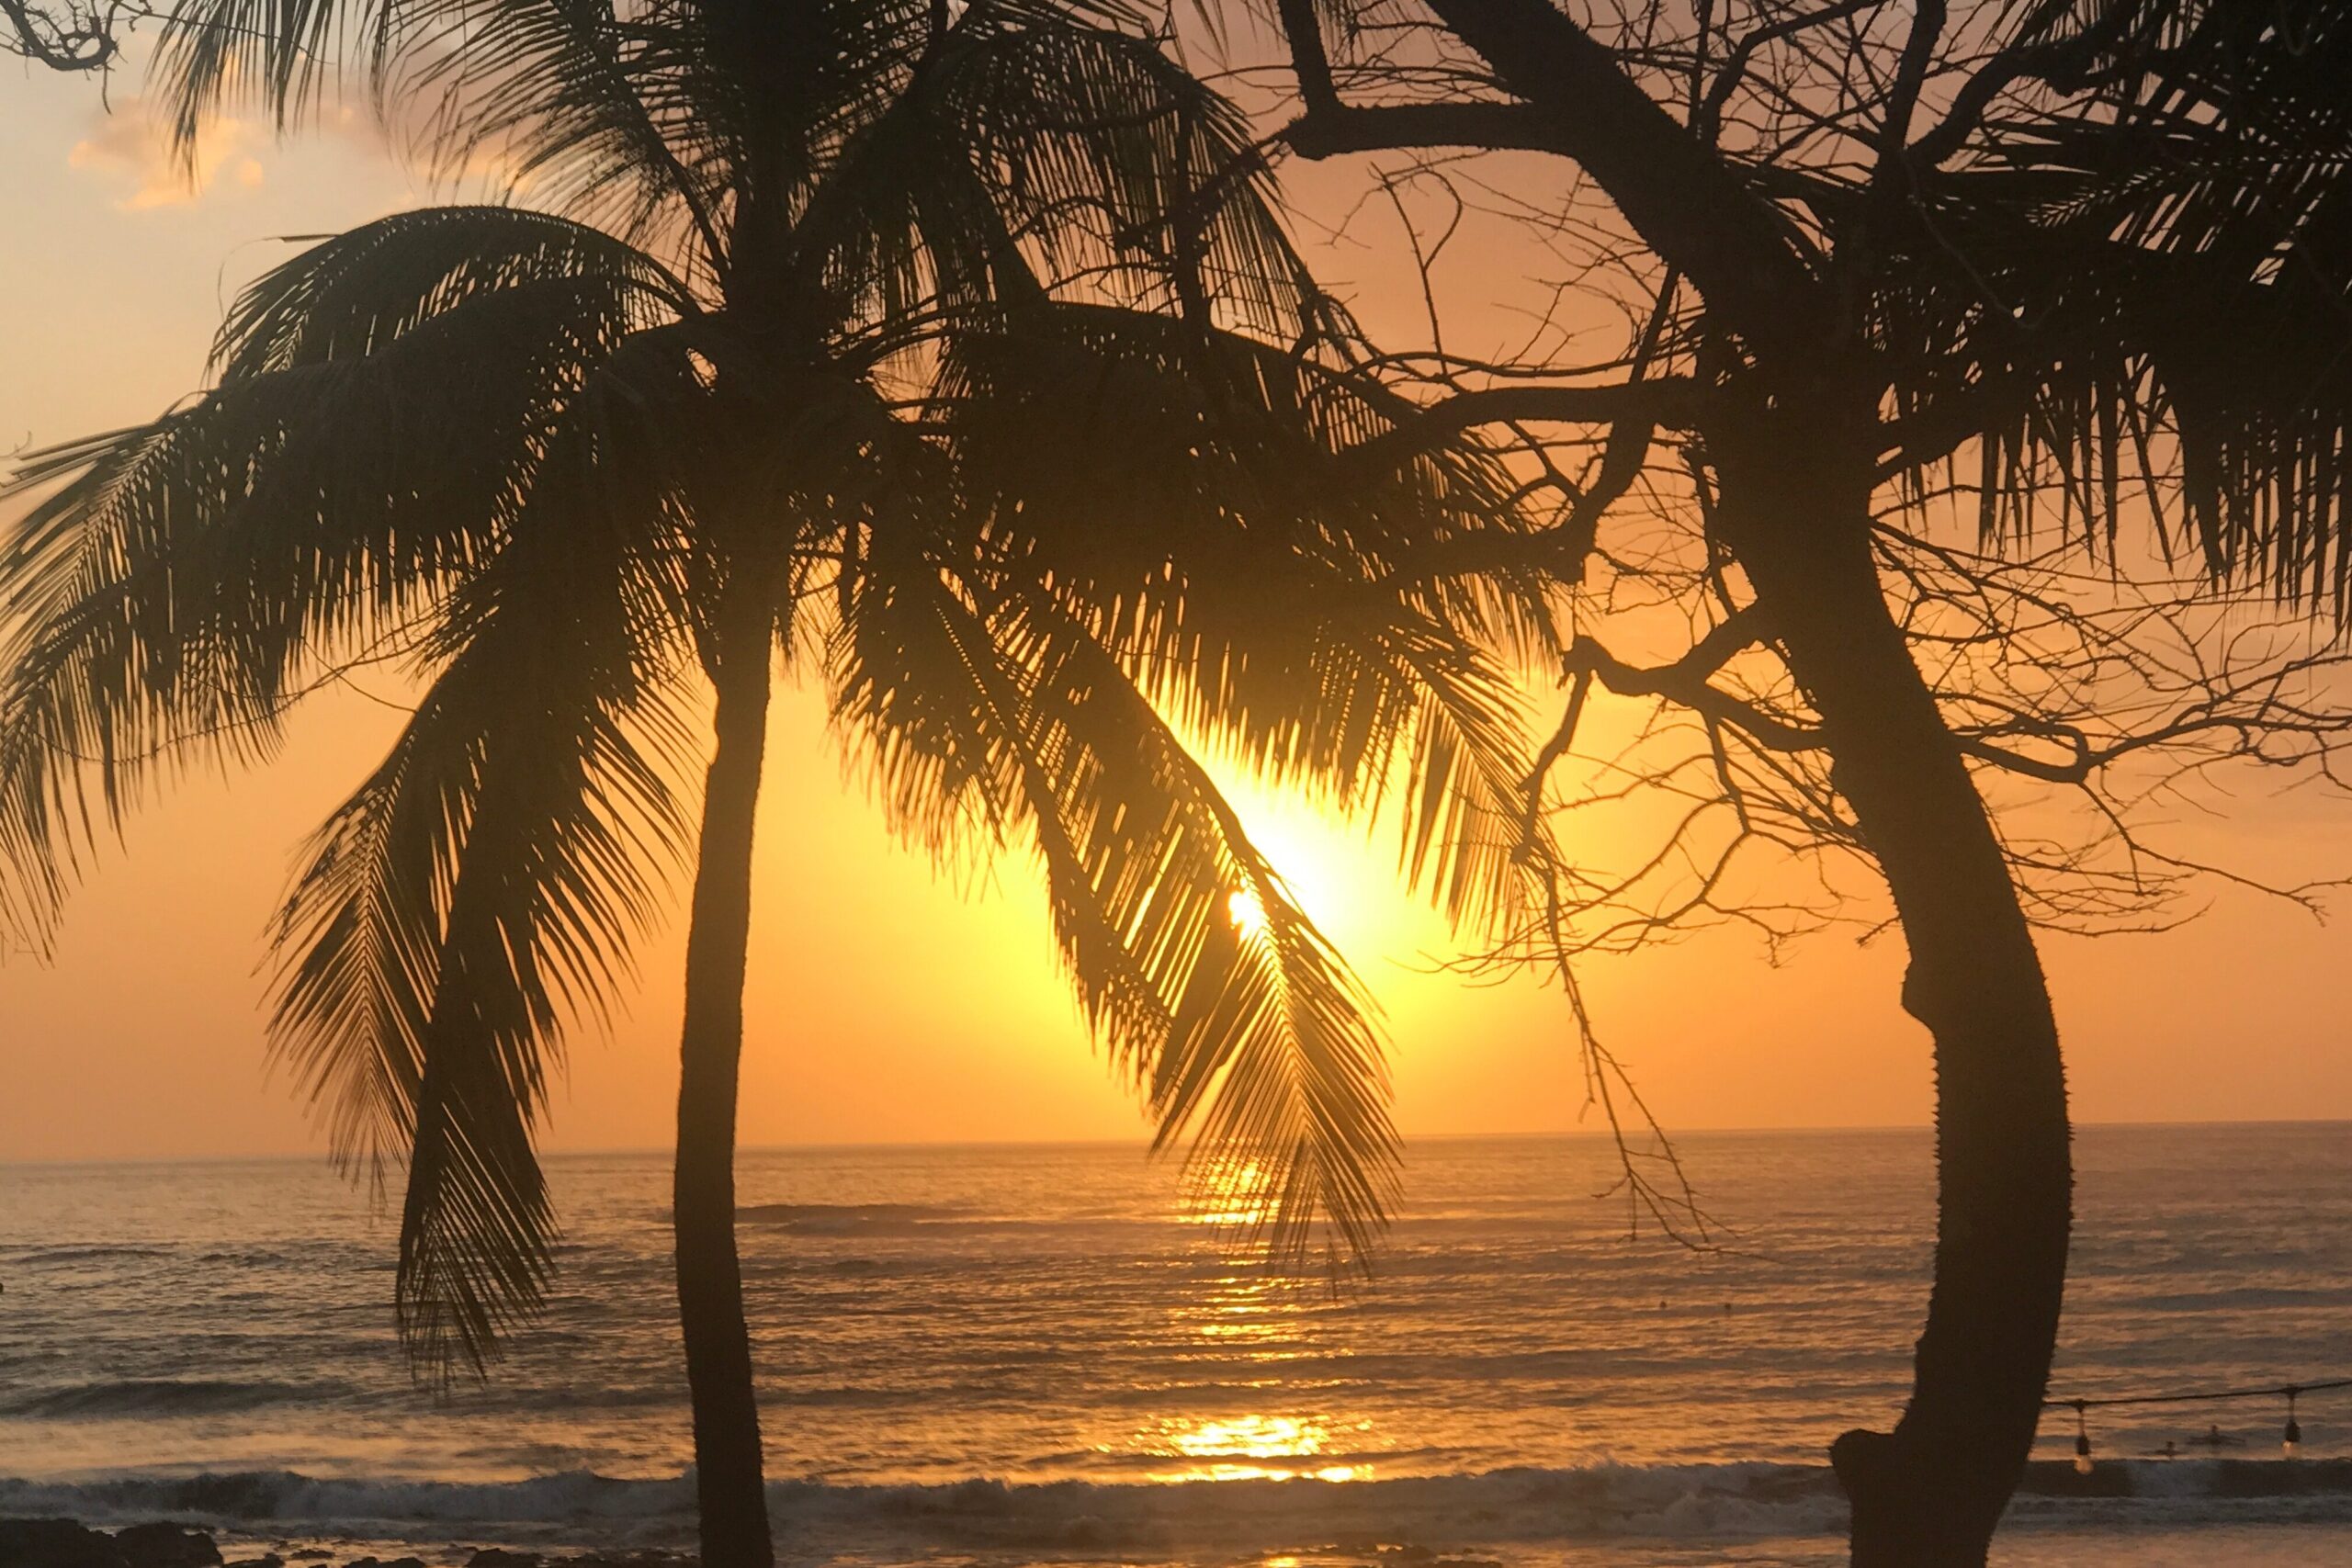 Sunset seen through palm trees at Nosara Beach in Costa Rica